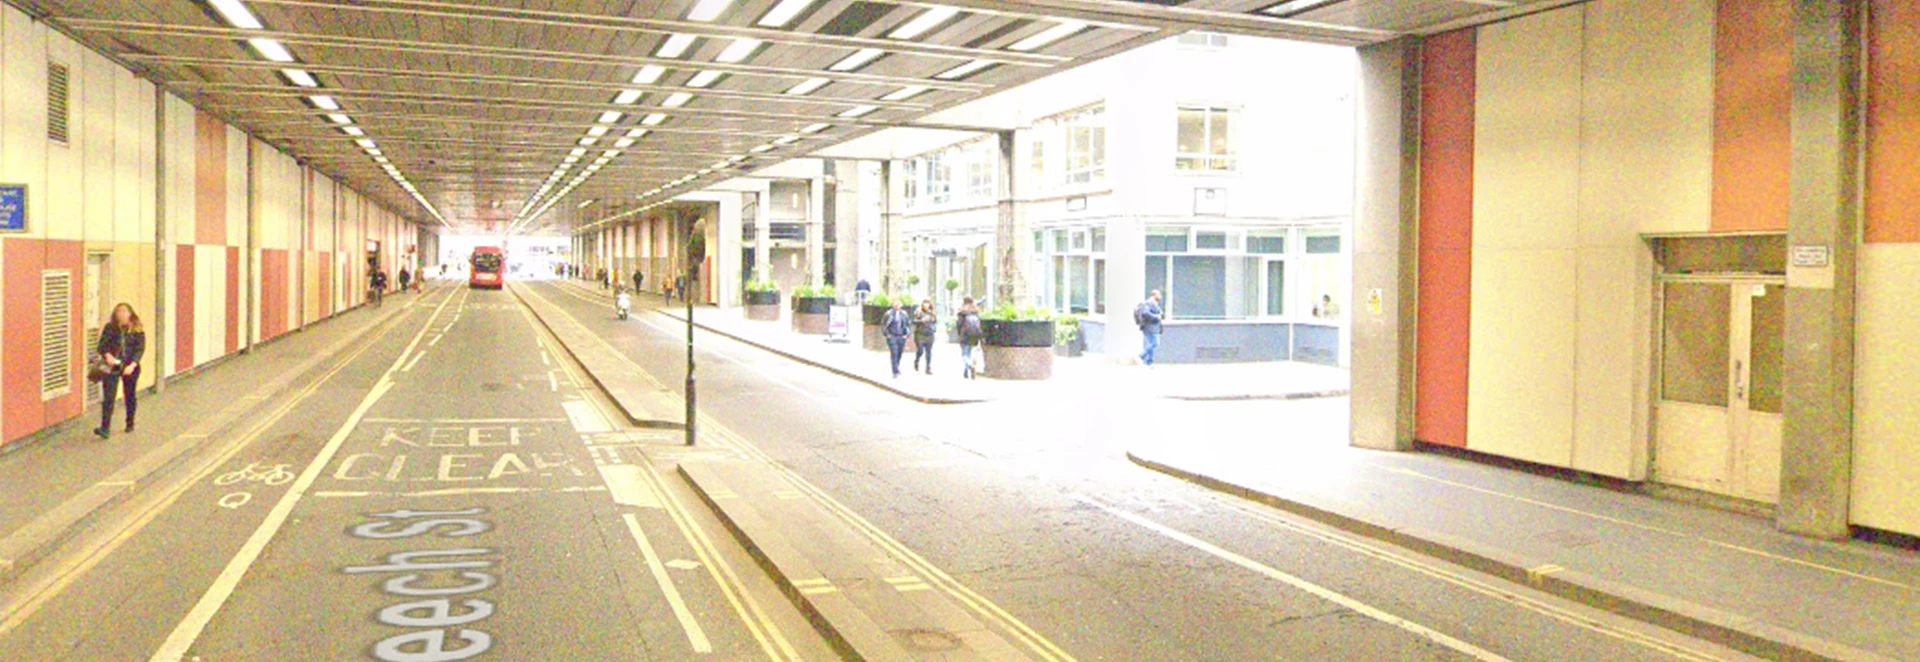 London gets UK’s first zero-emissions street